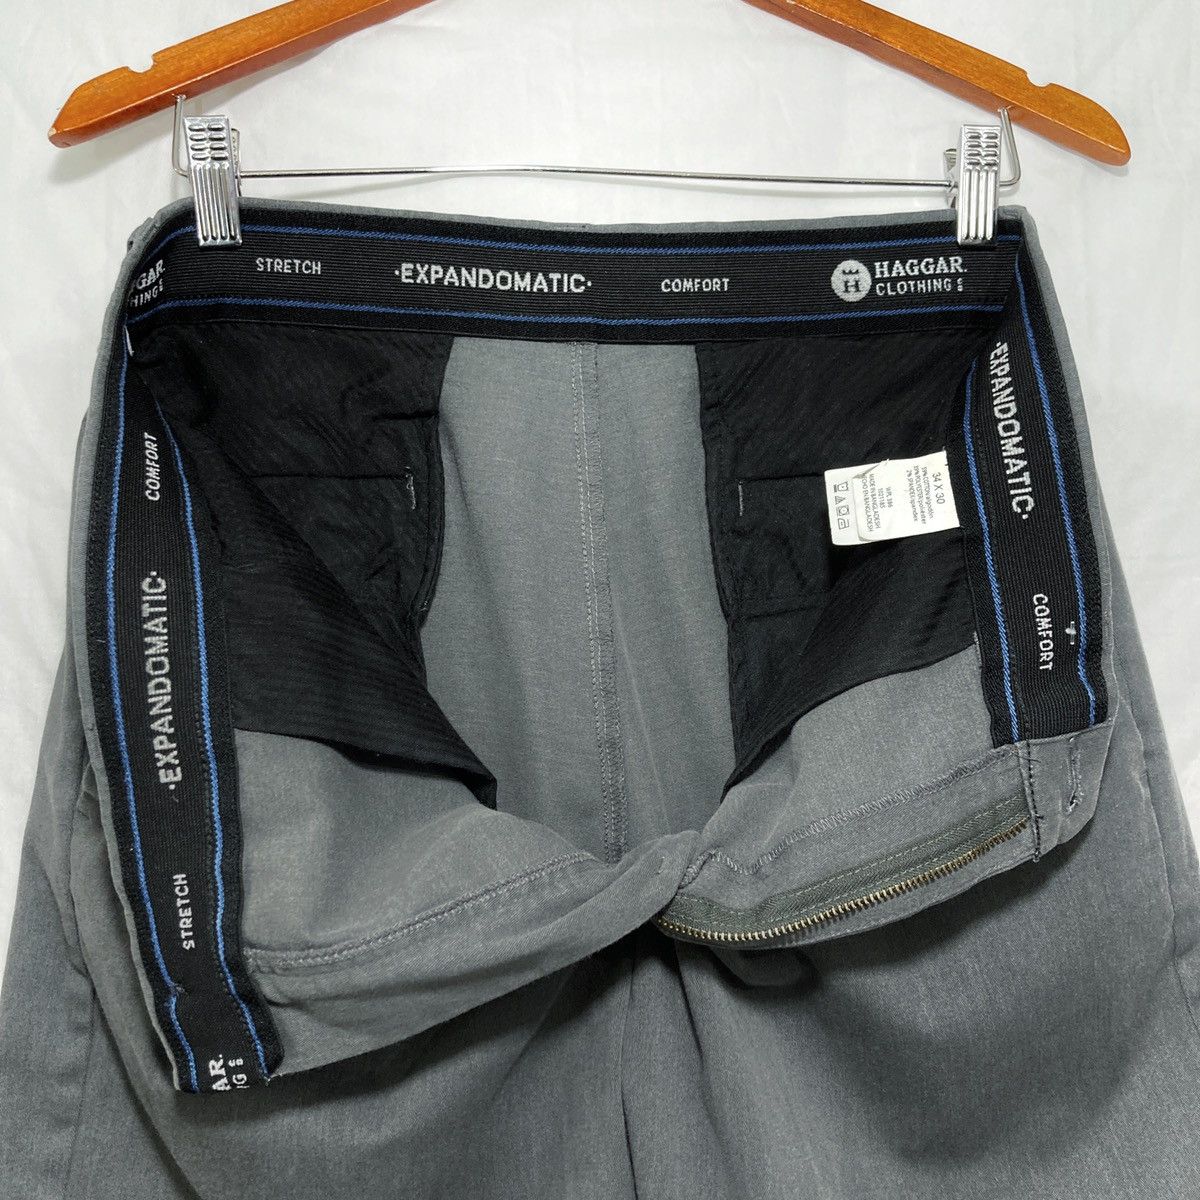 Haggar HAGGAR Men’s Stretch Pants Comfort Expandimatic Classic Fit Size 34R - 4 Thumbnail